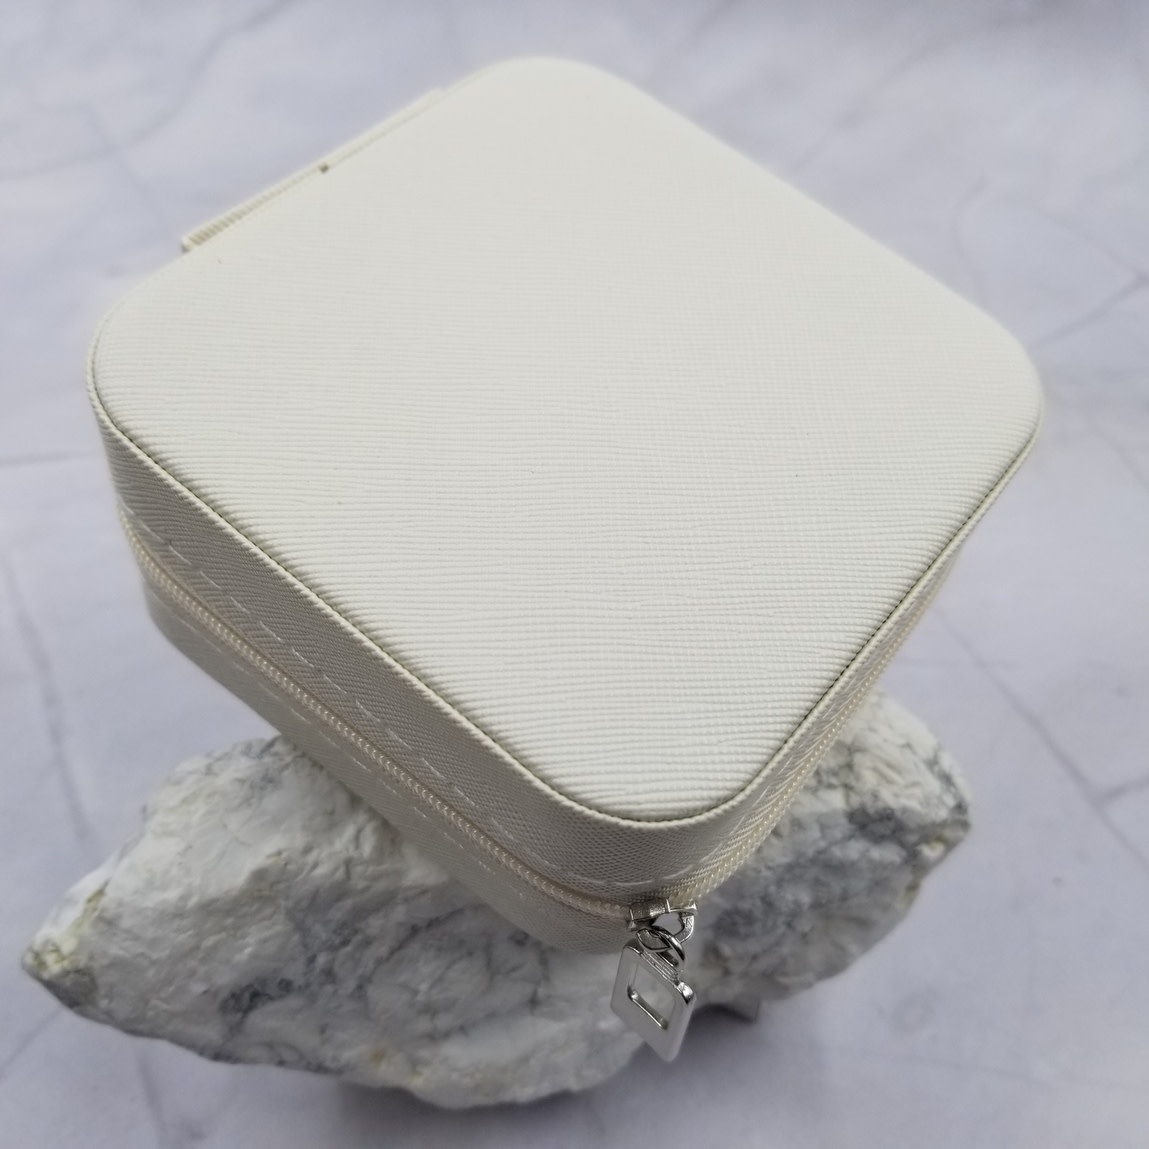 FLEURISH White Leather Jewelry Box Organizer Box with Zipper